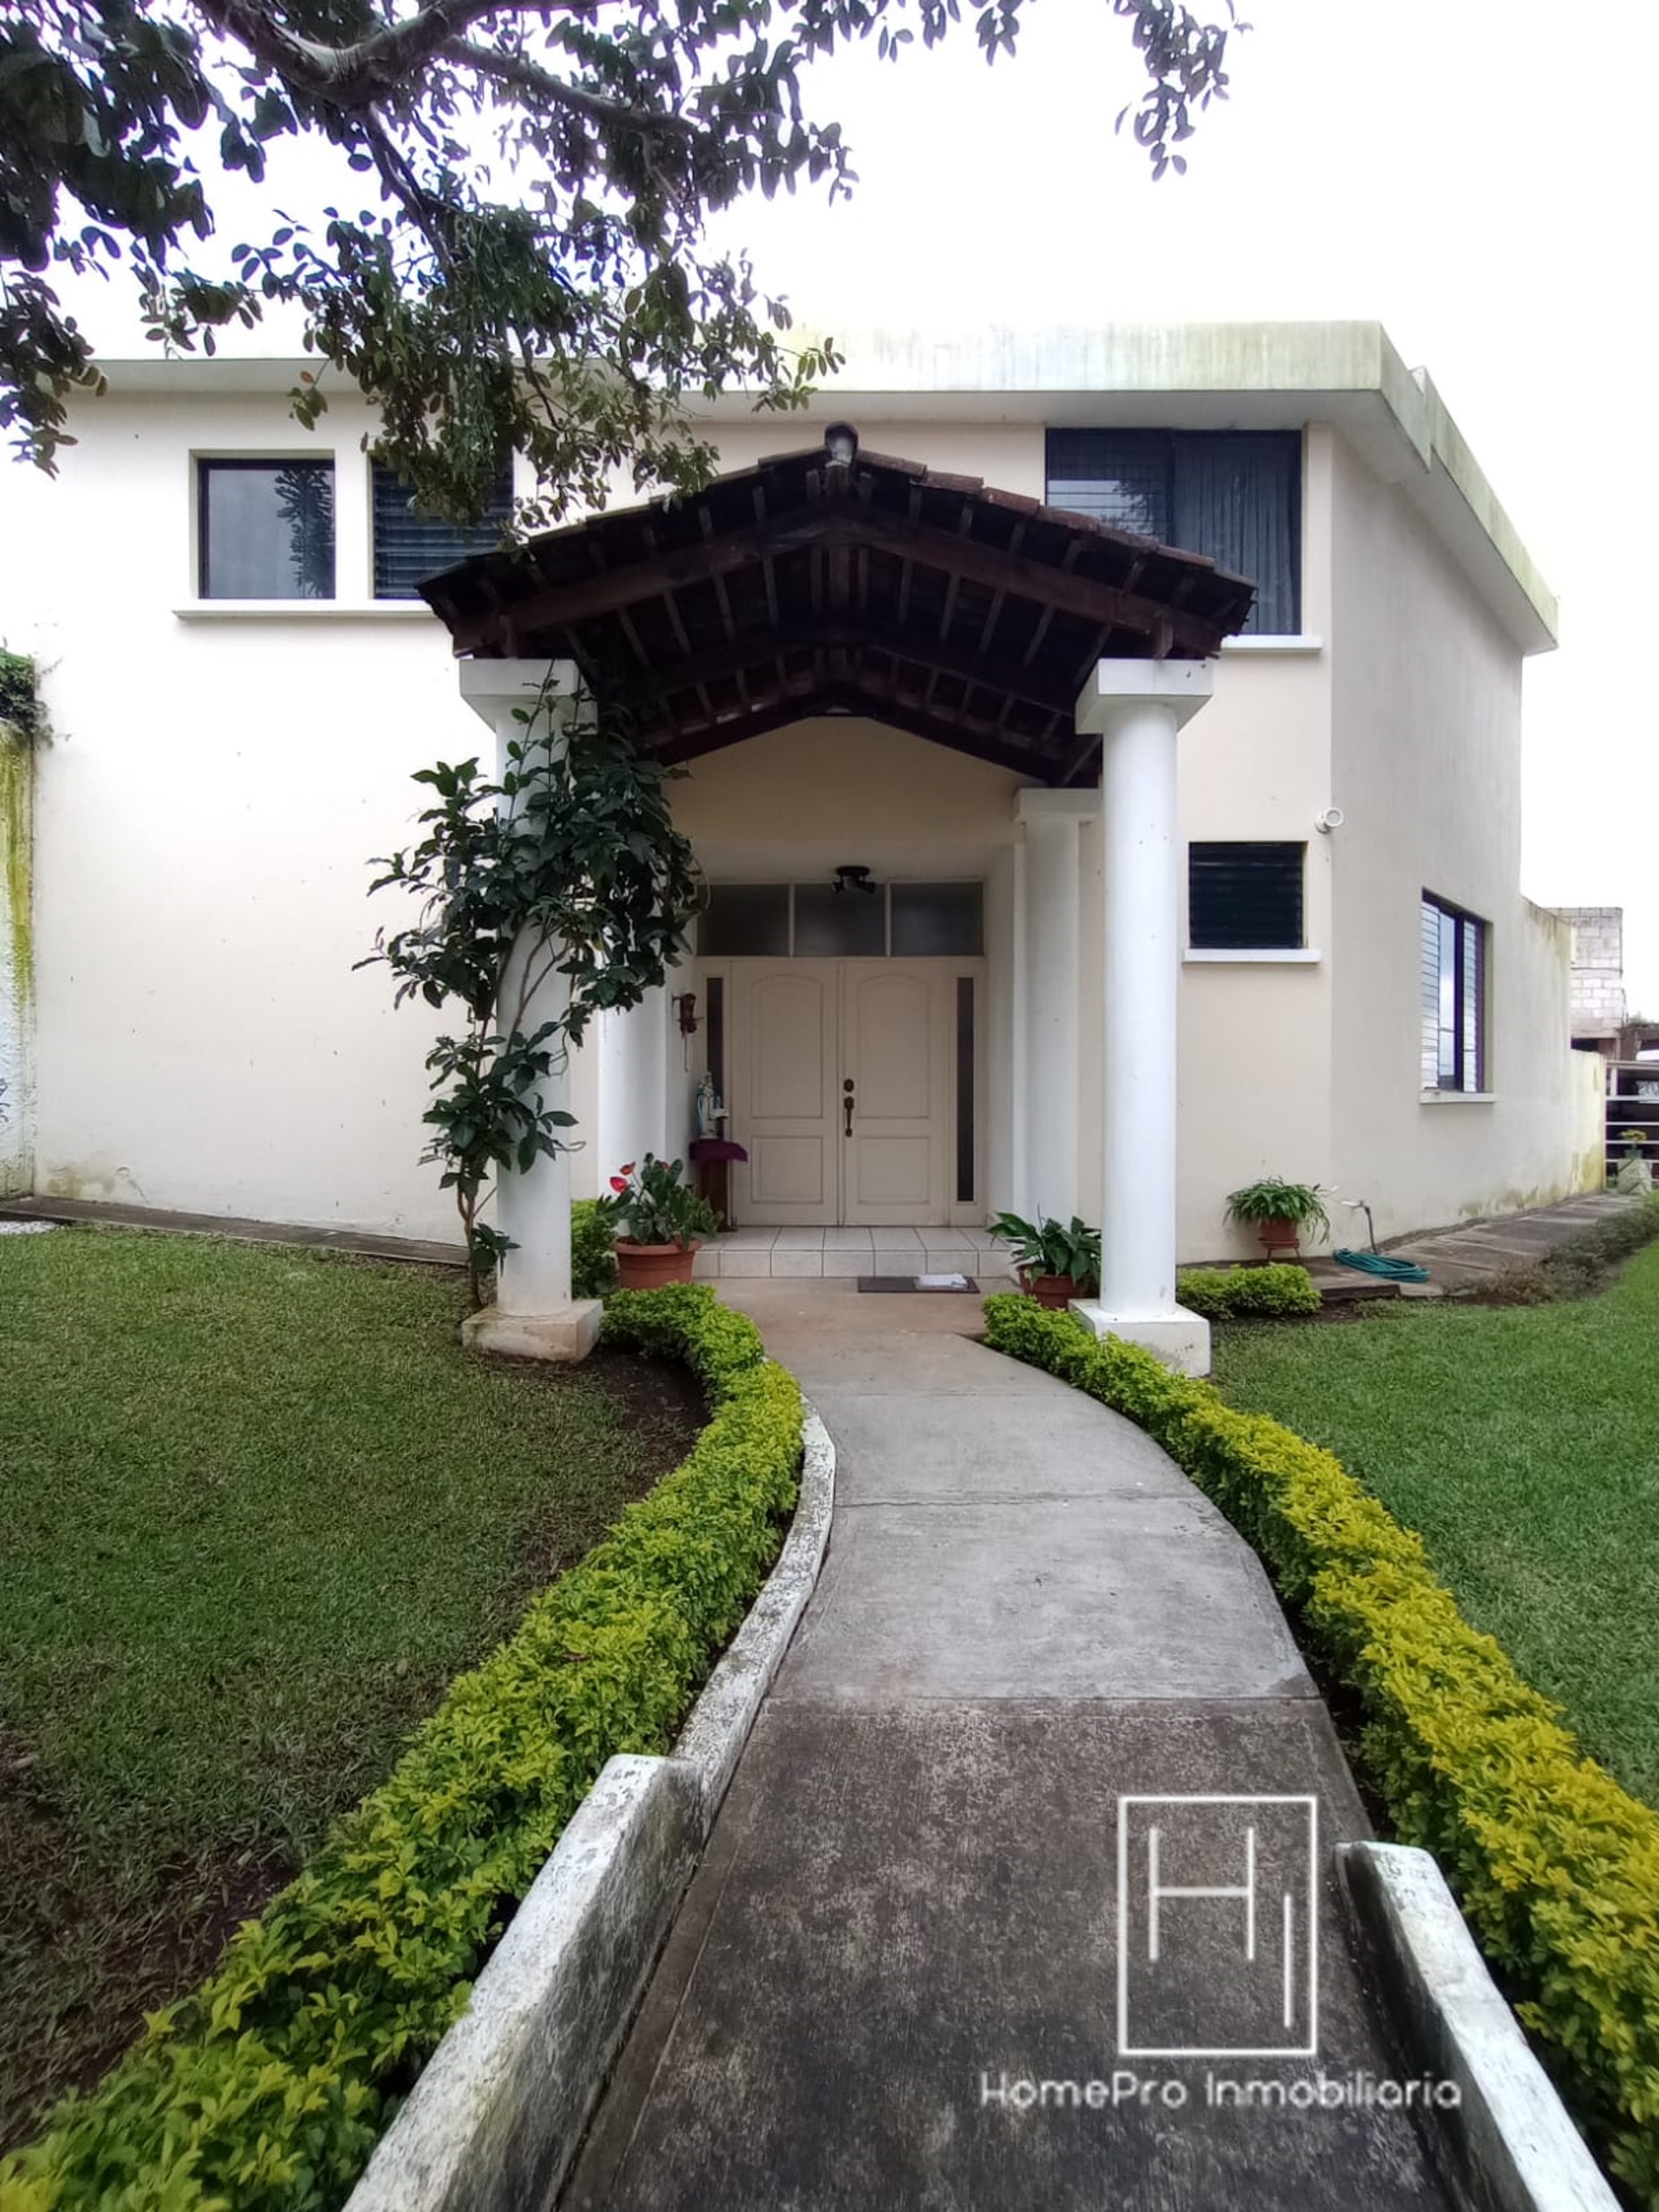 HomePro Inmobiliaria vende amplia casa en San Cristóbal.